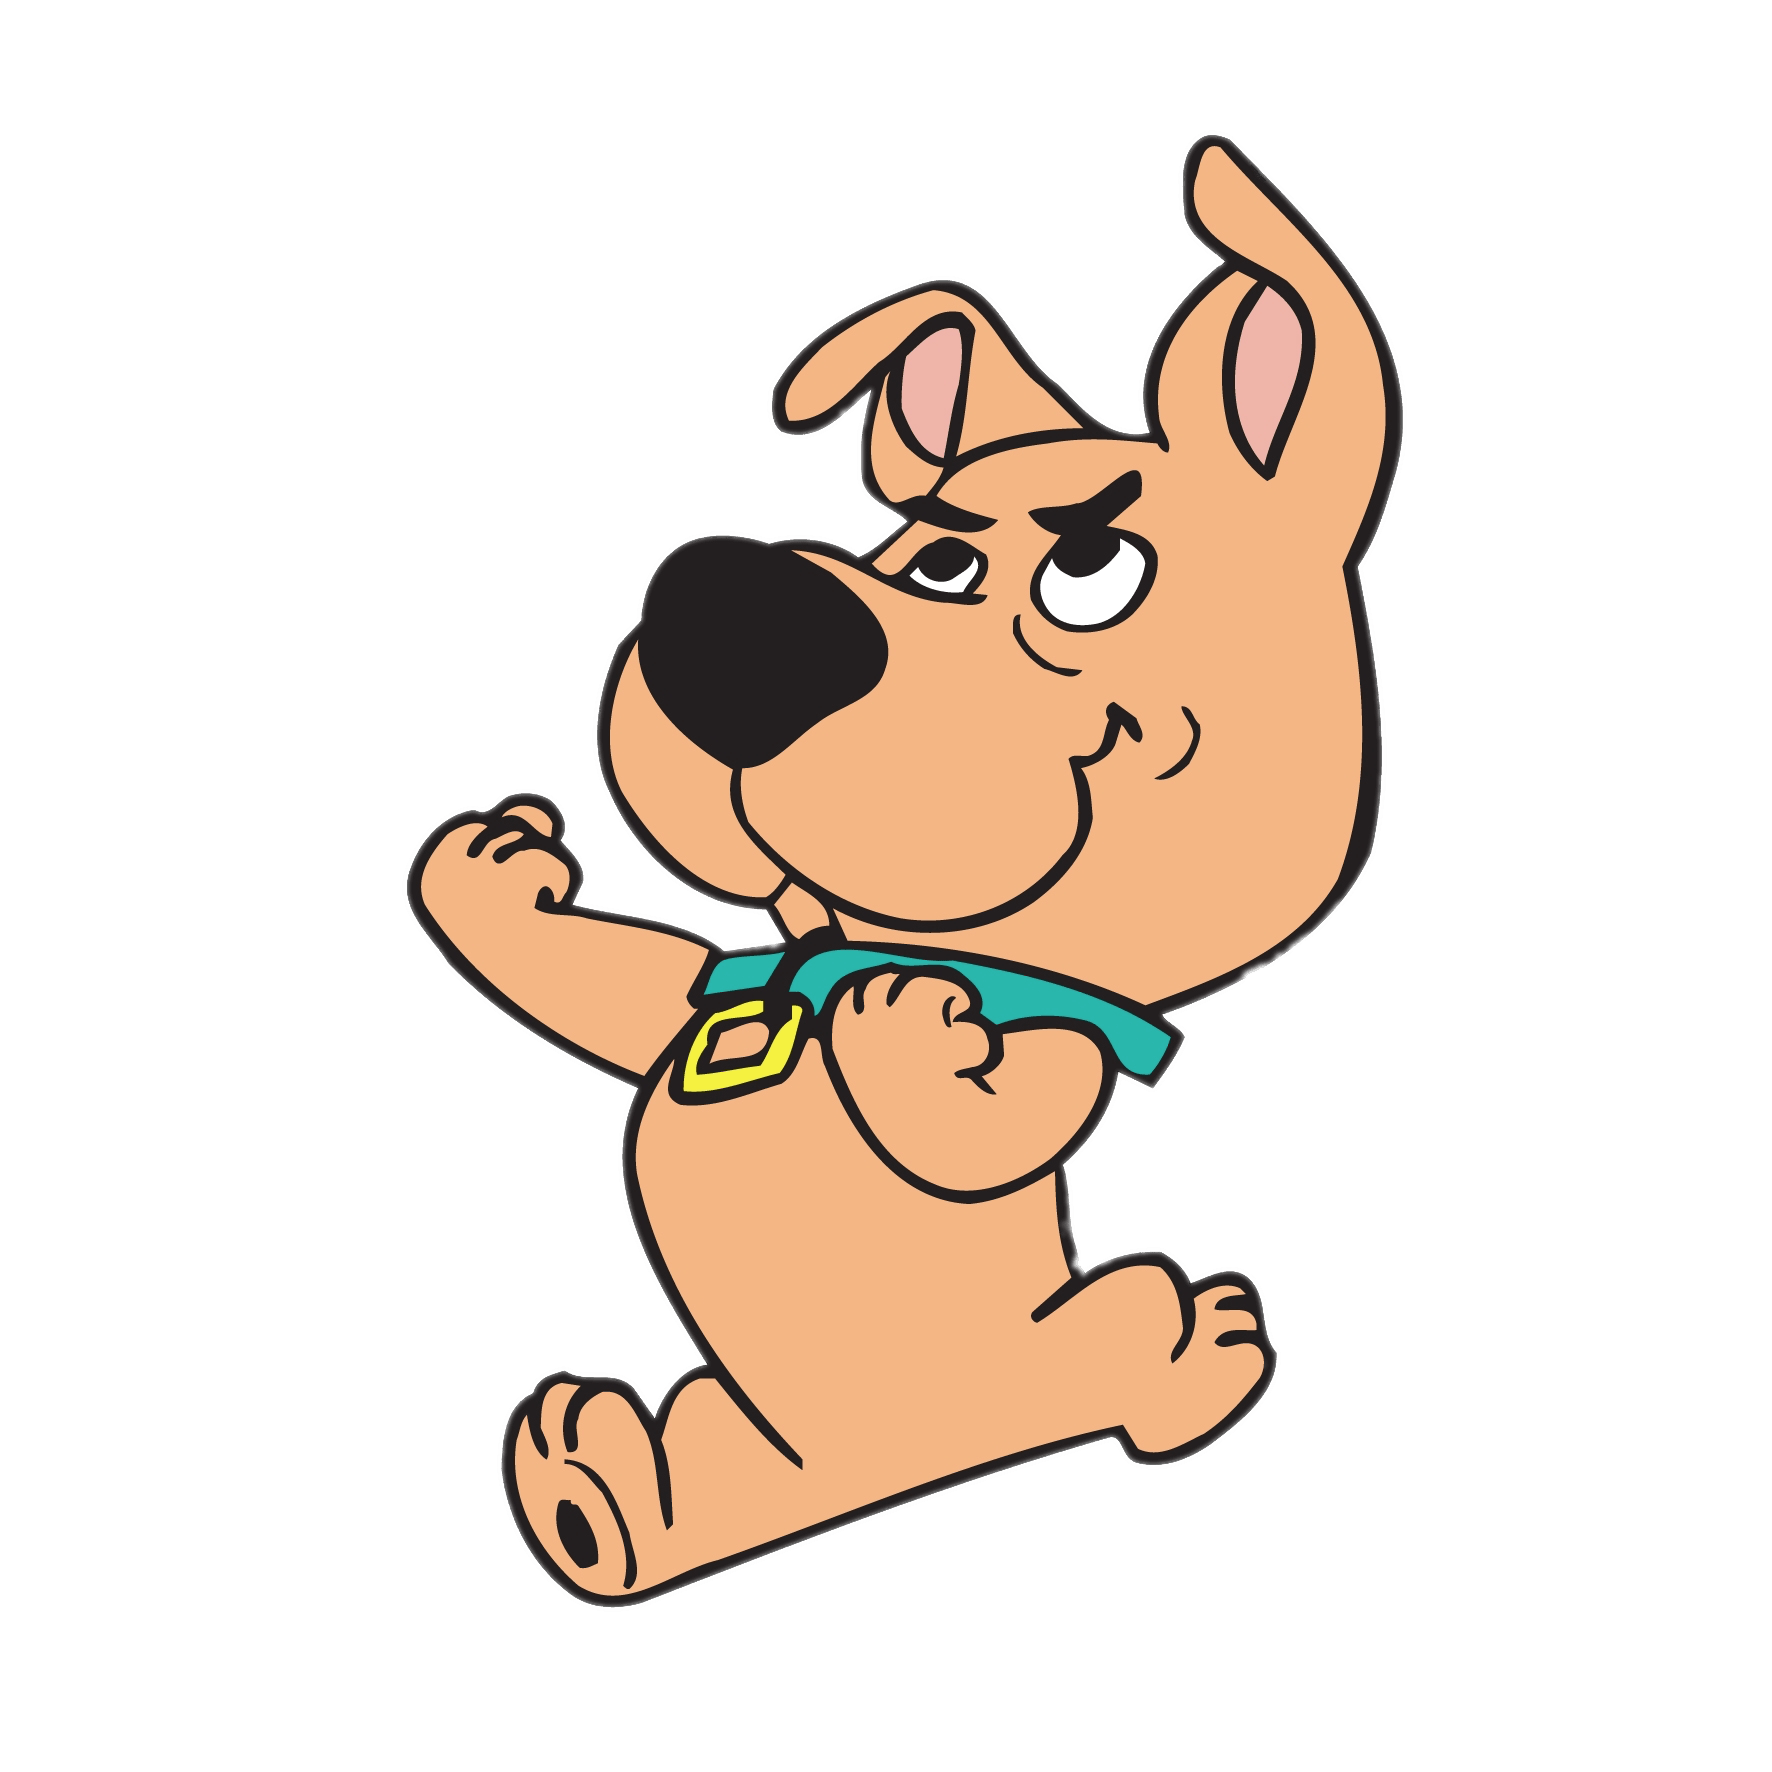 Scooby-Doo and Shaggy Cardboard Cutout / Standee Set